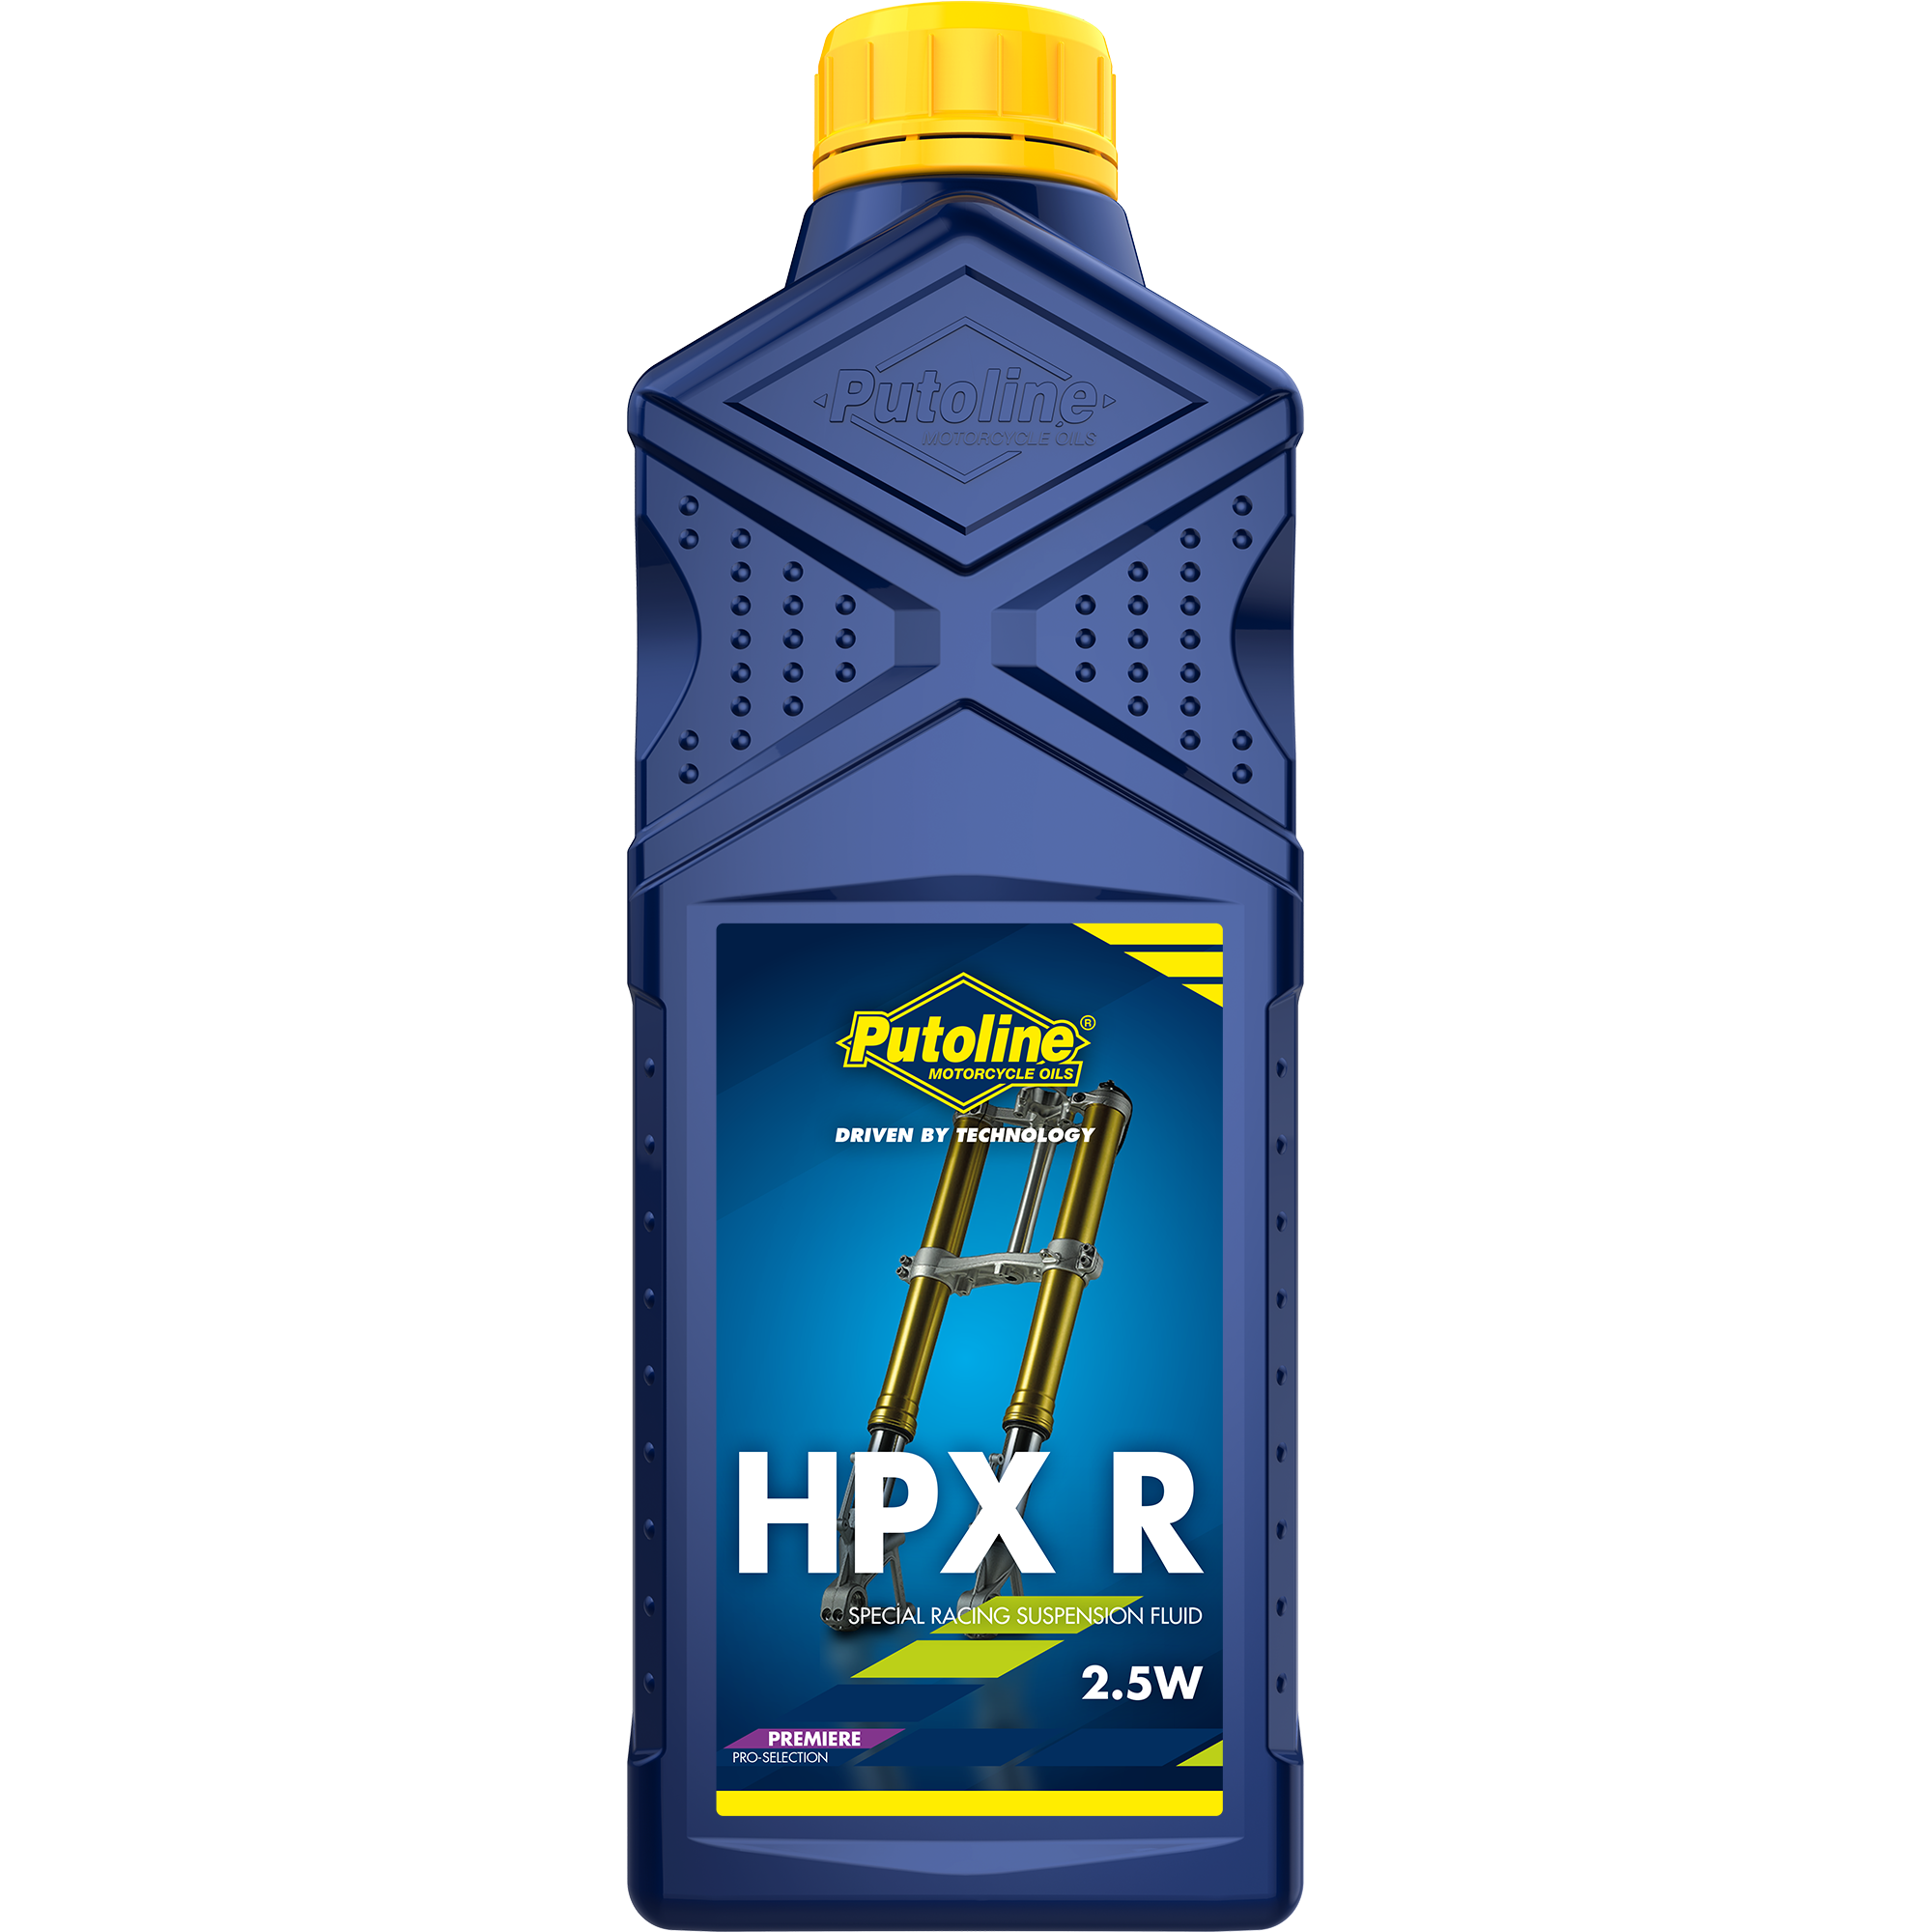 Putoline HPX R 2.5W, 1 lt